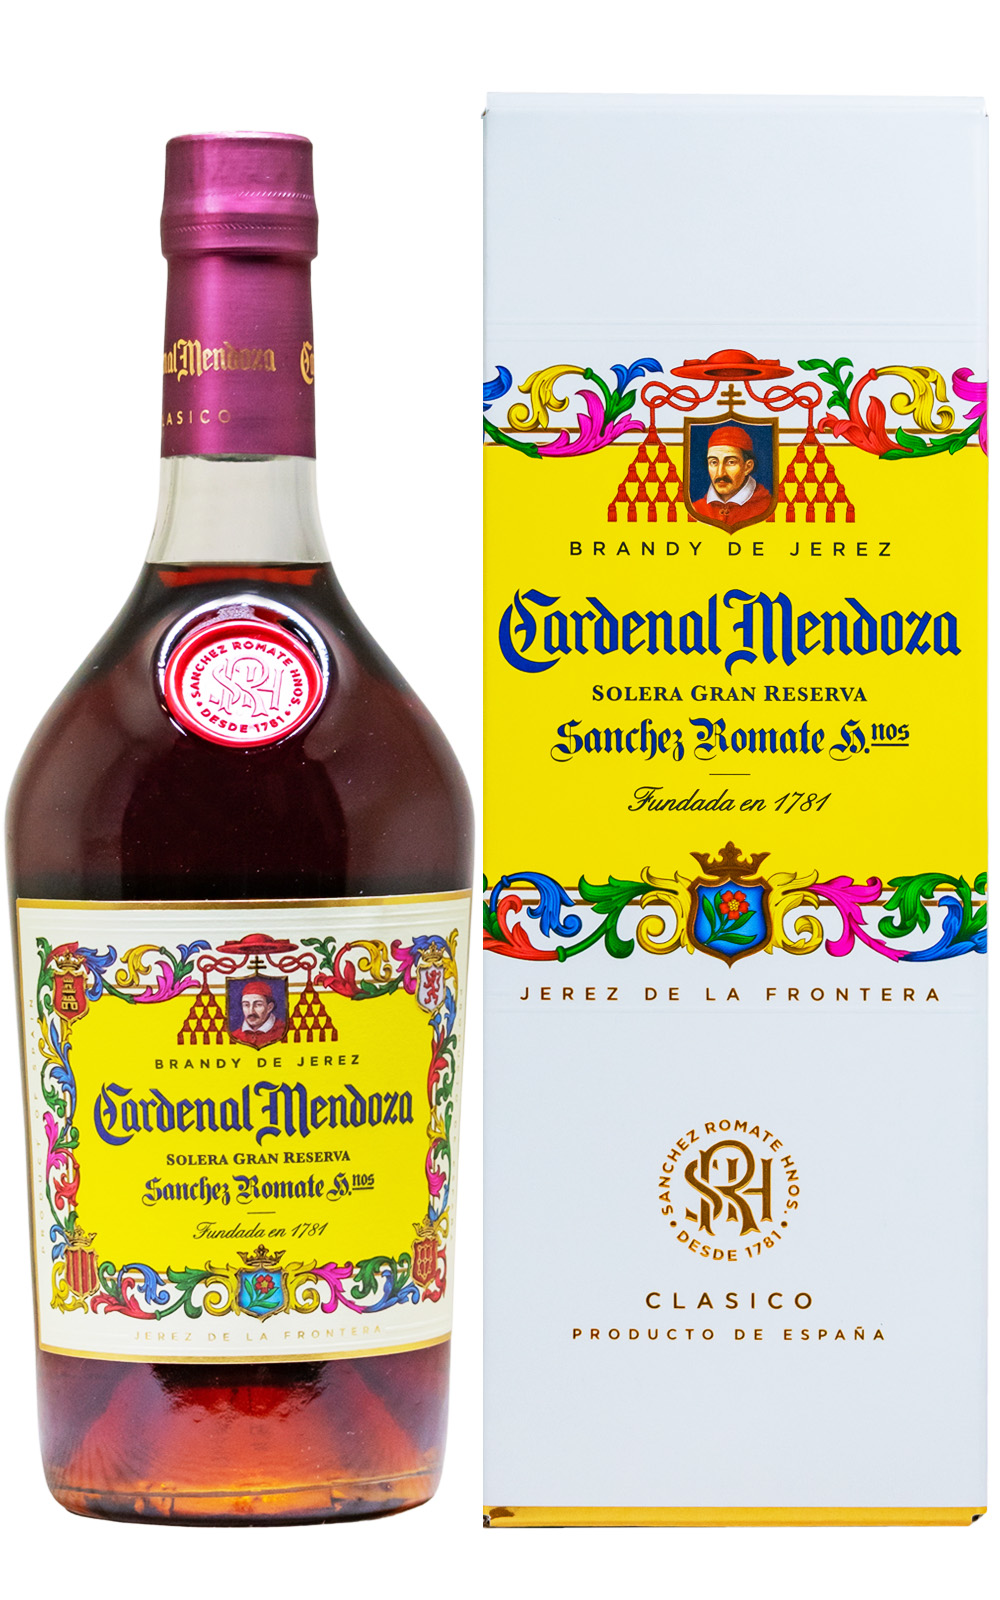 Cardenal Mendoza Brandy de günstig kaufen